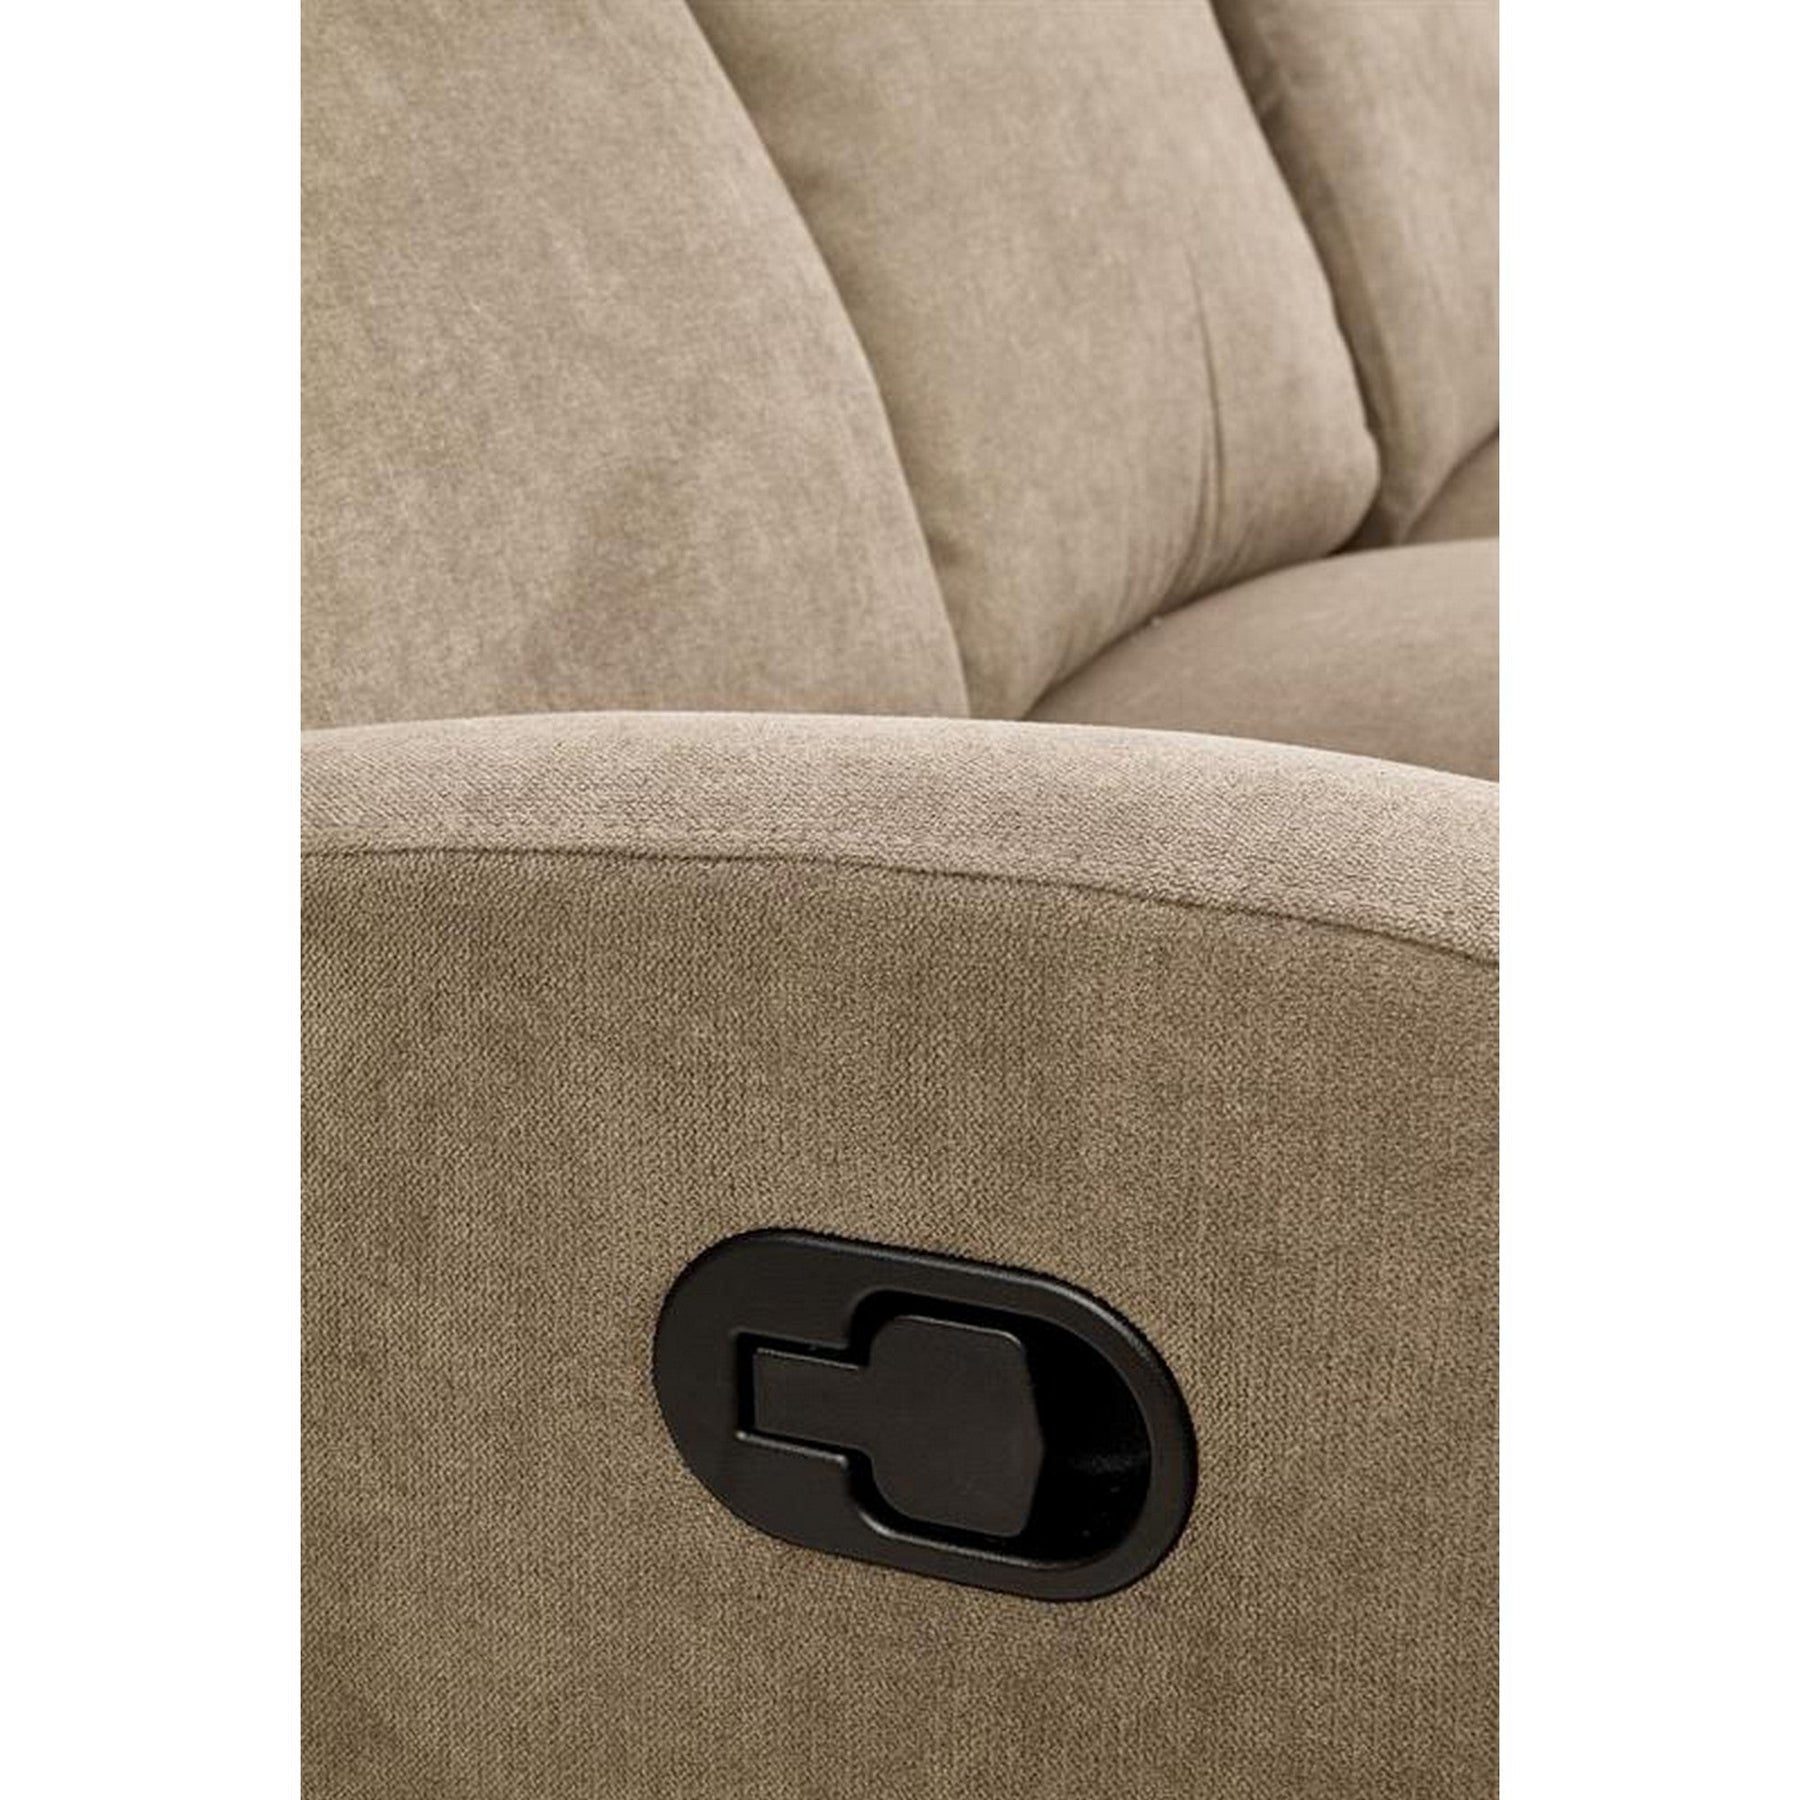 Canapea pliabila OSLO 3S, stofa bej, 180x95x100 cm